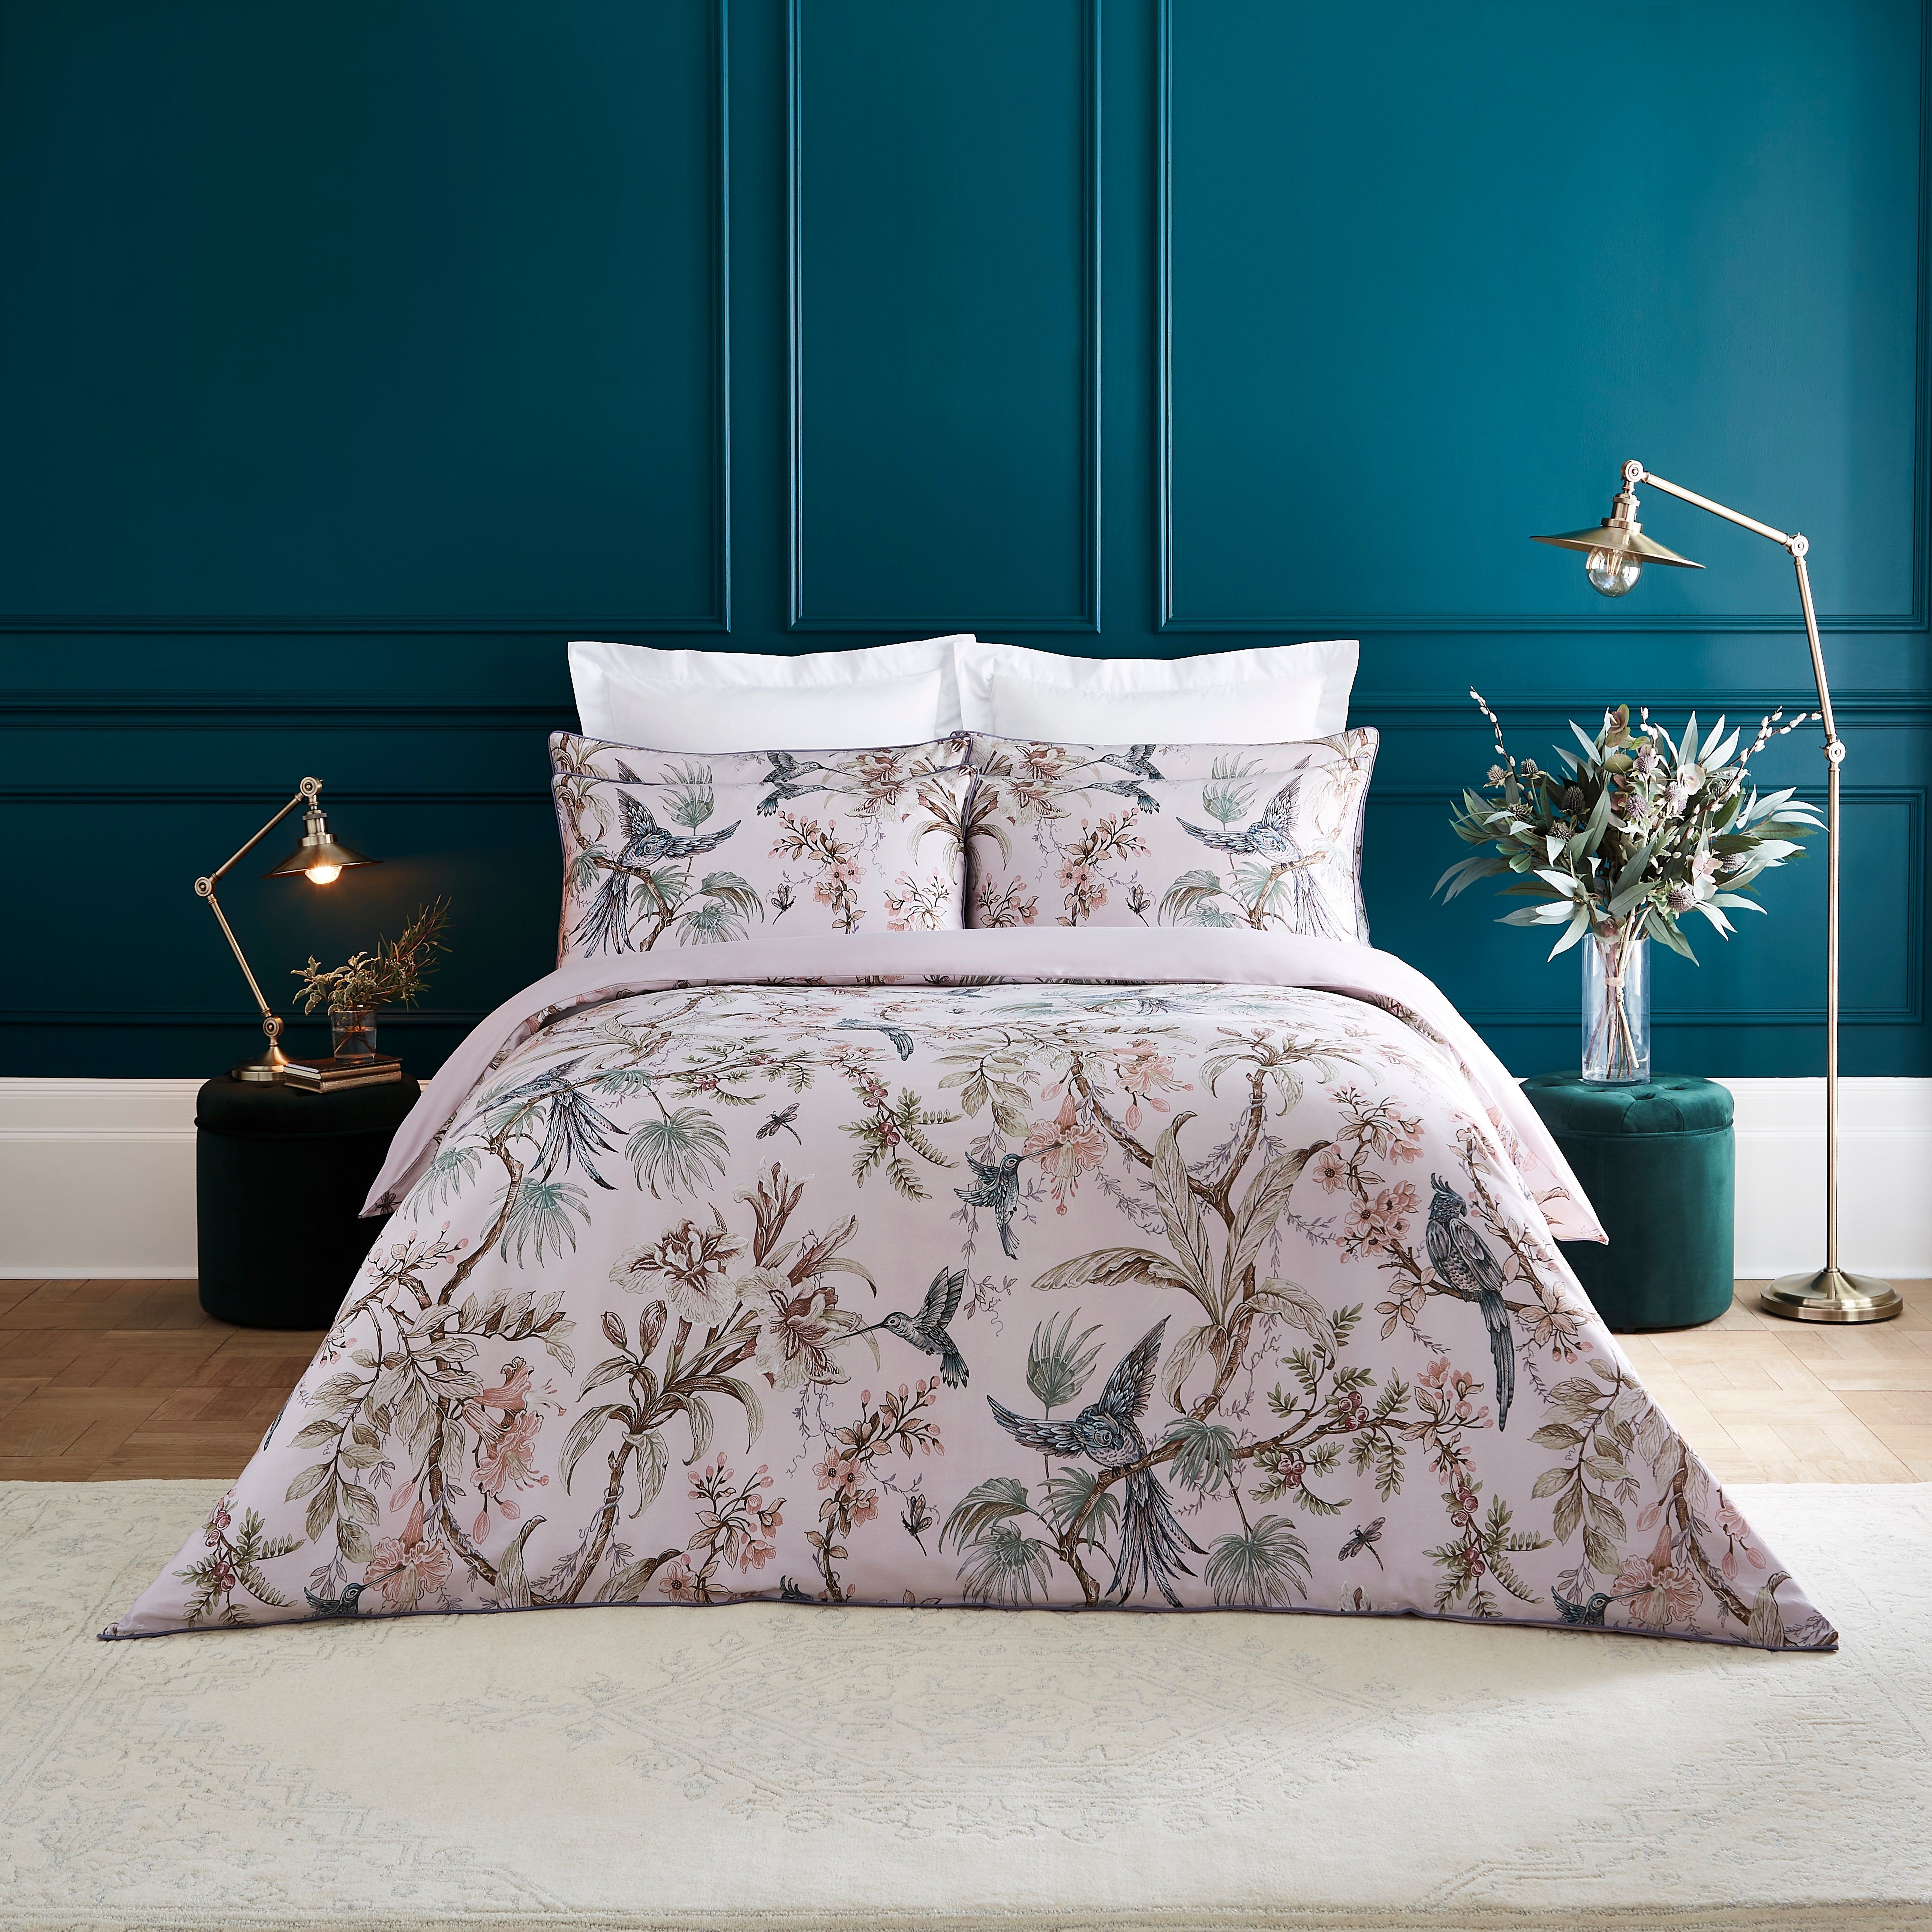 Dorma Lillian 100 Cotton Duvet Cover And Pillowcase Set Pinkbrowngreen